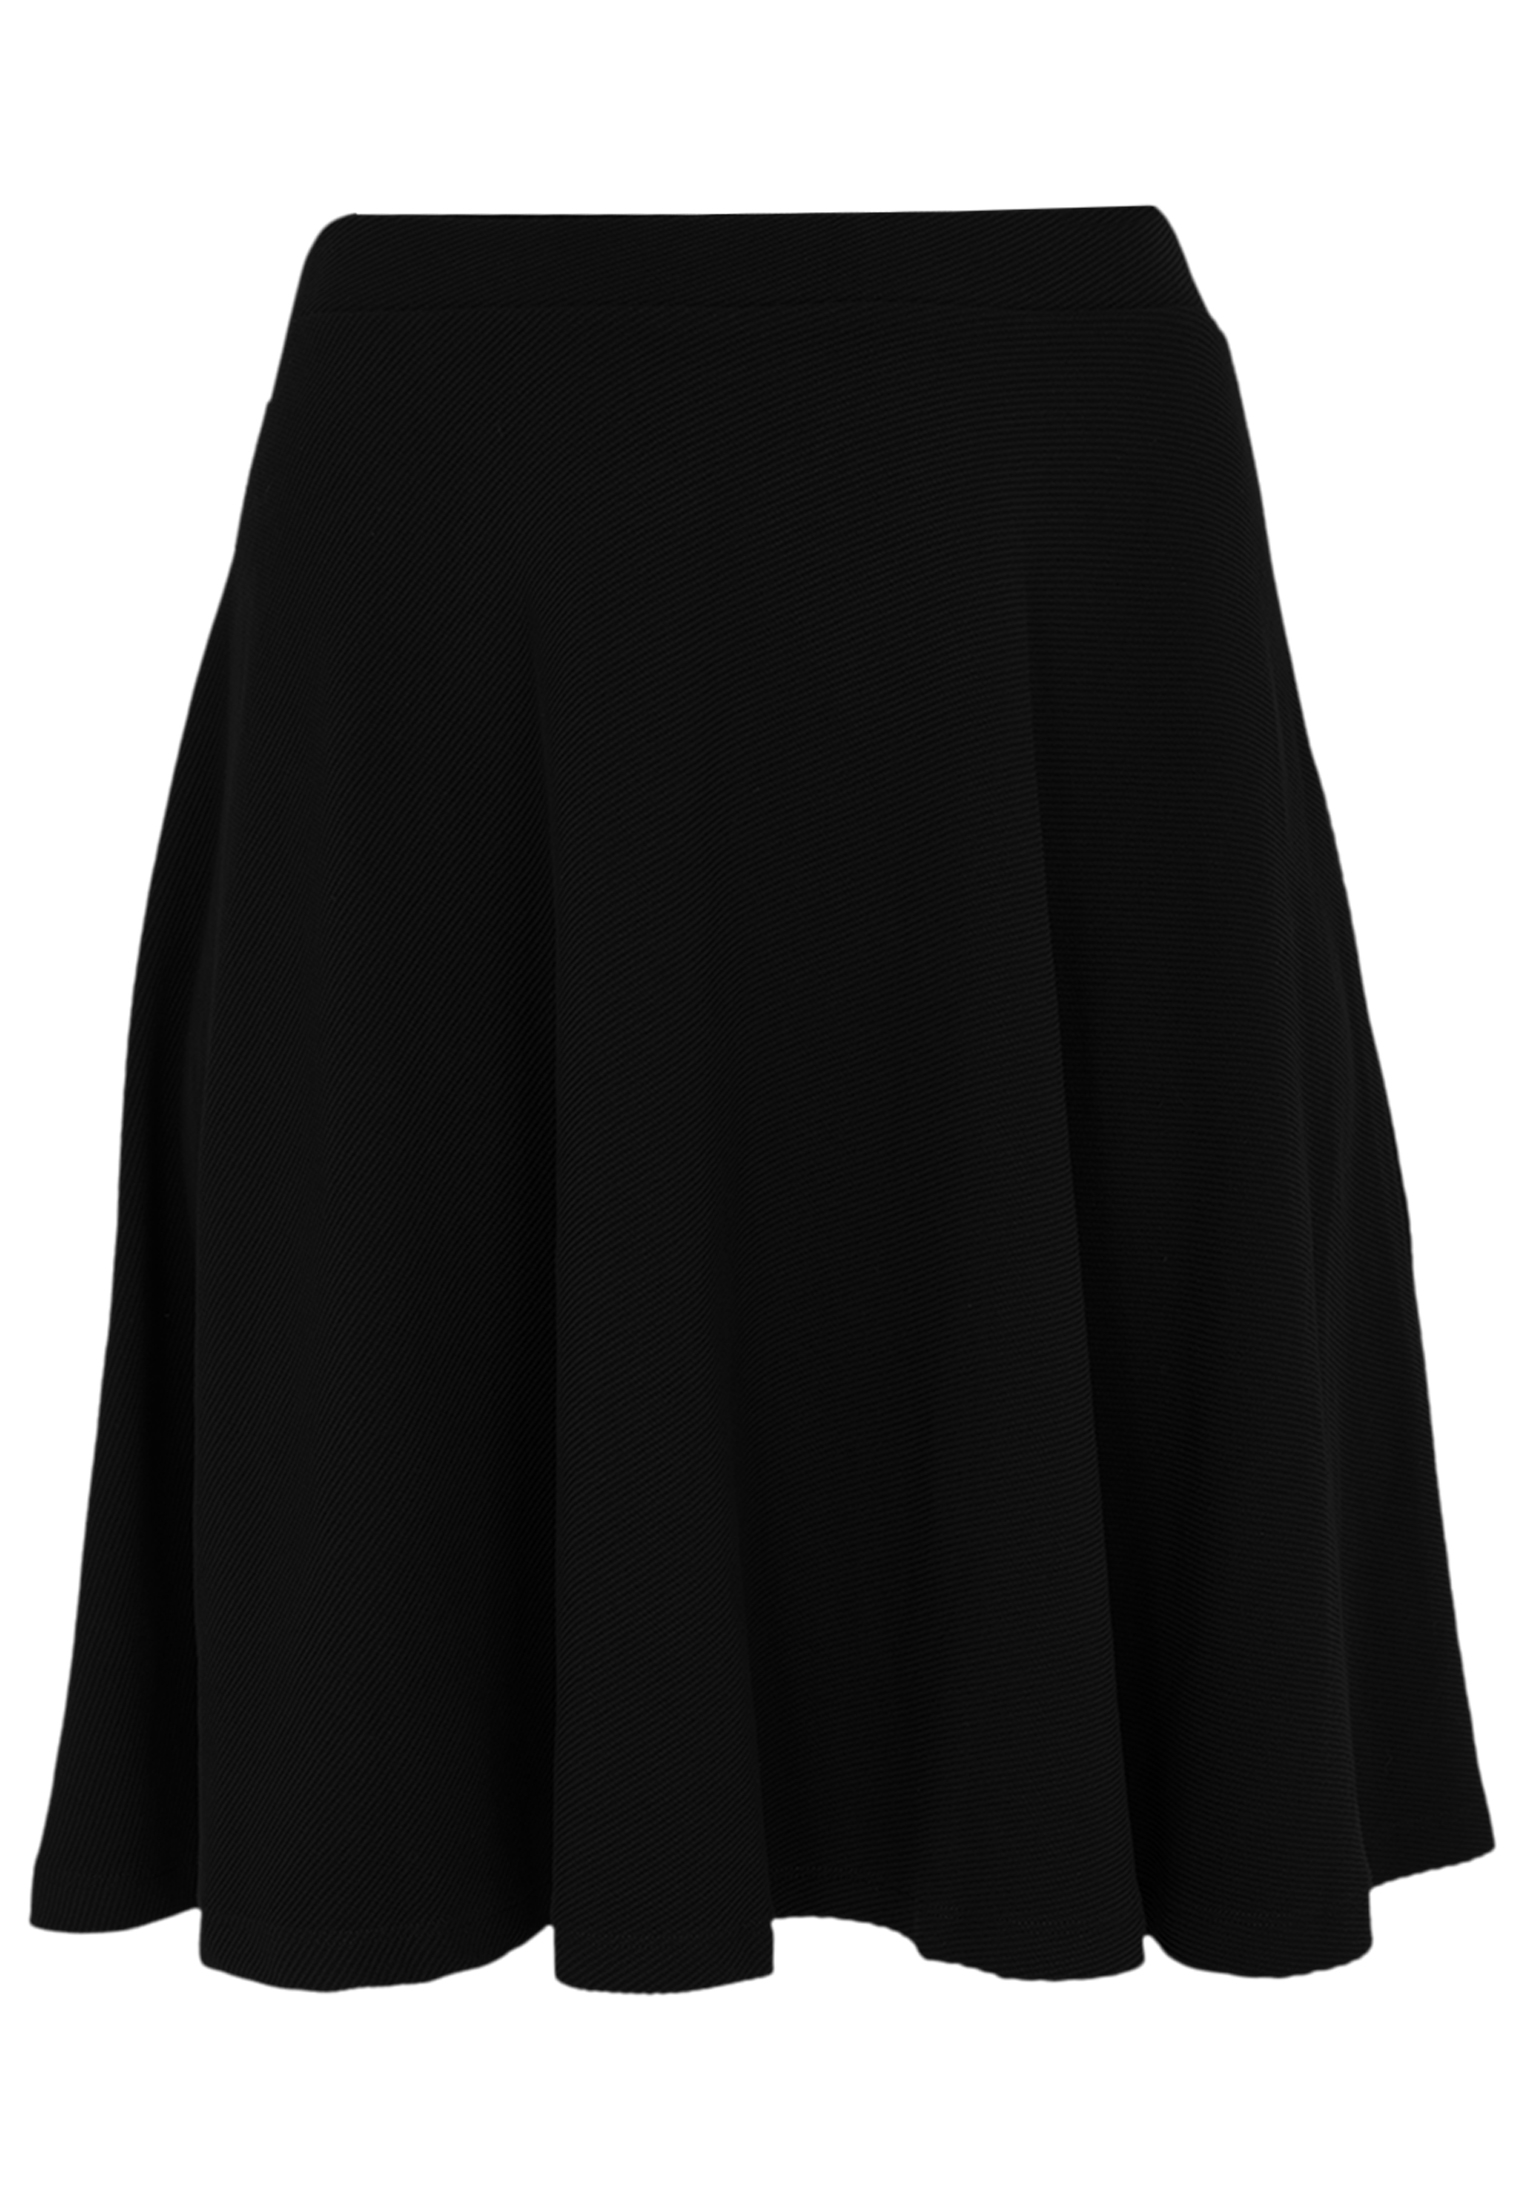 Skirt half circle DIAGONAL - black blue